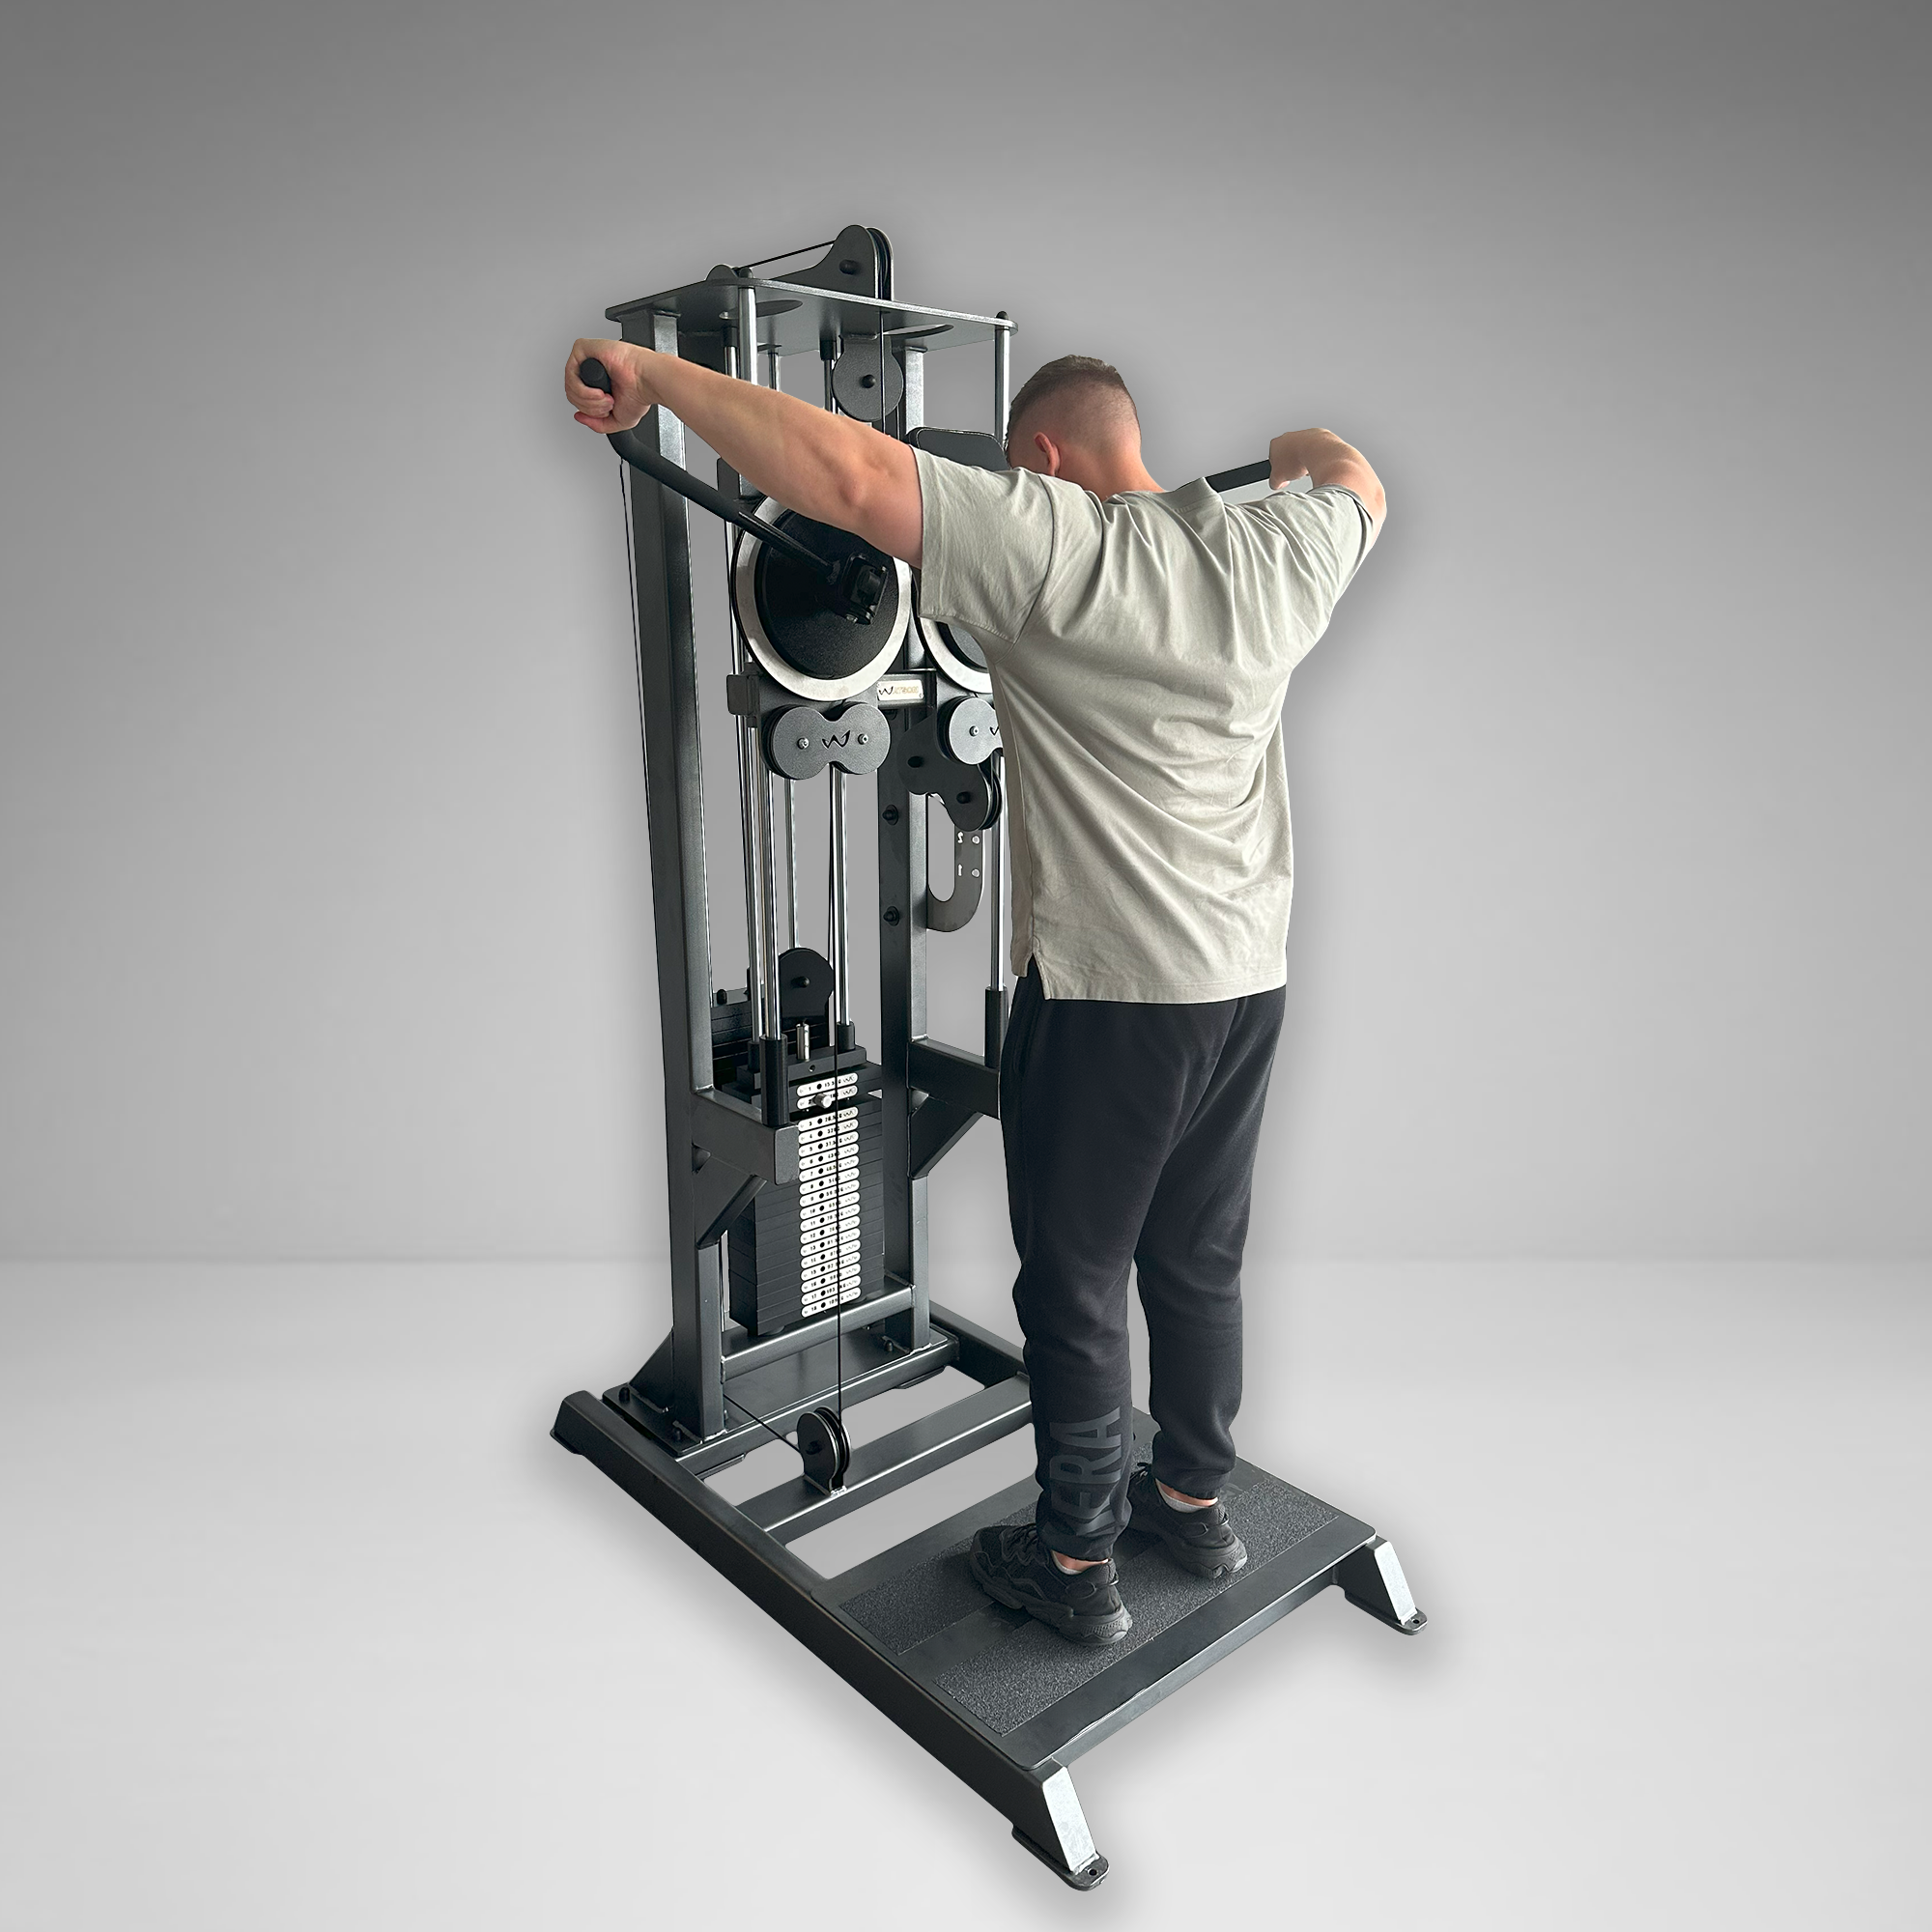 Single Stack Pec Fly / Rear Delt - Watson Gym Equipment